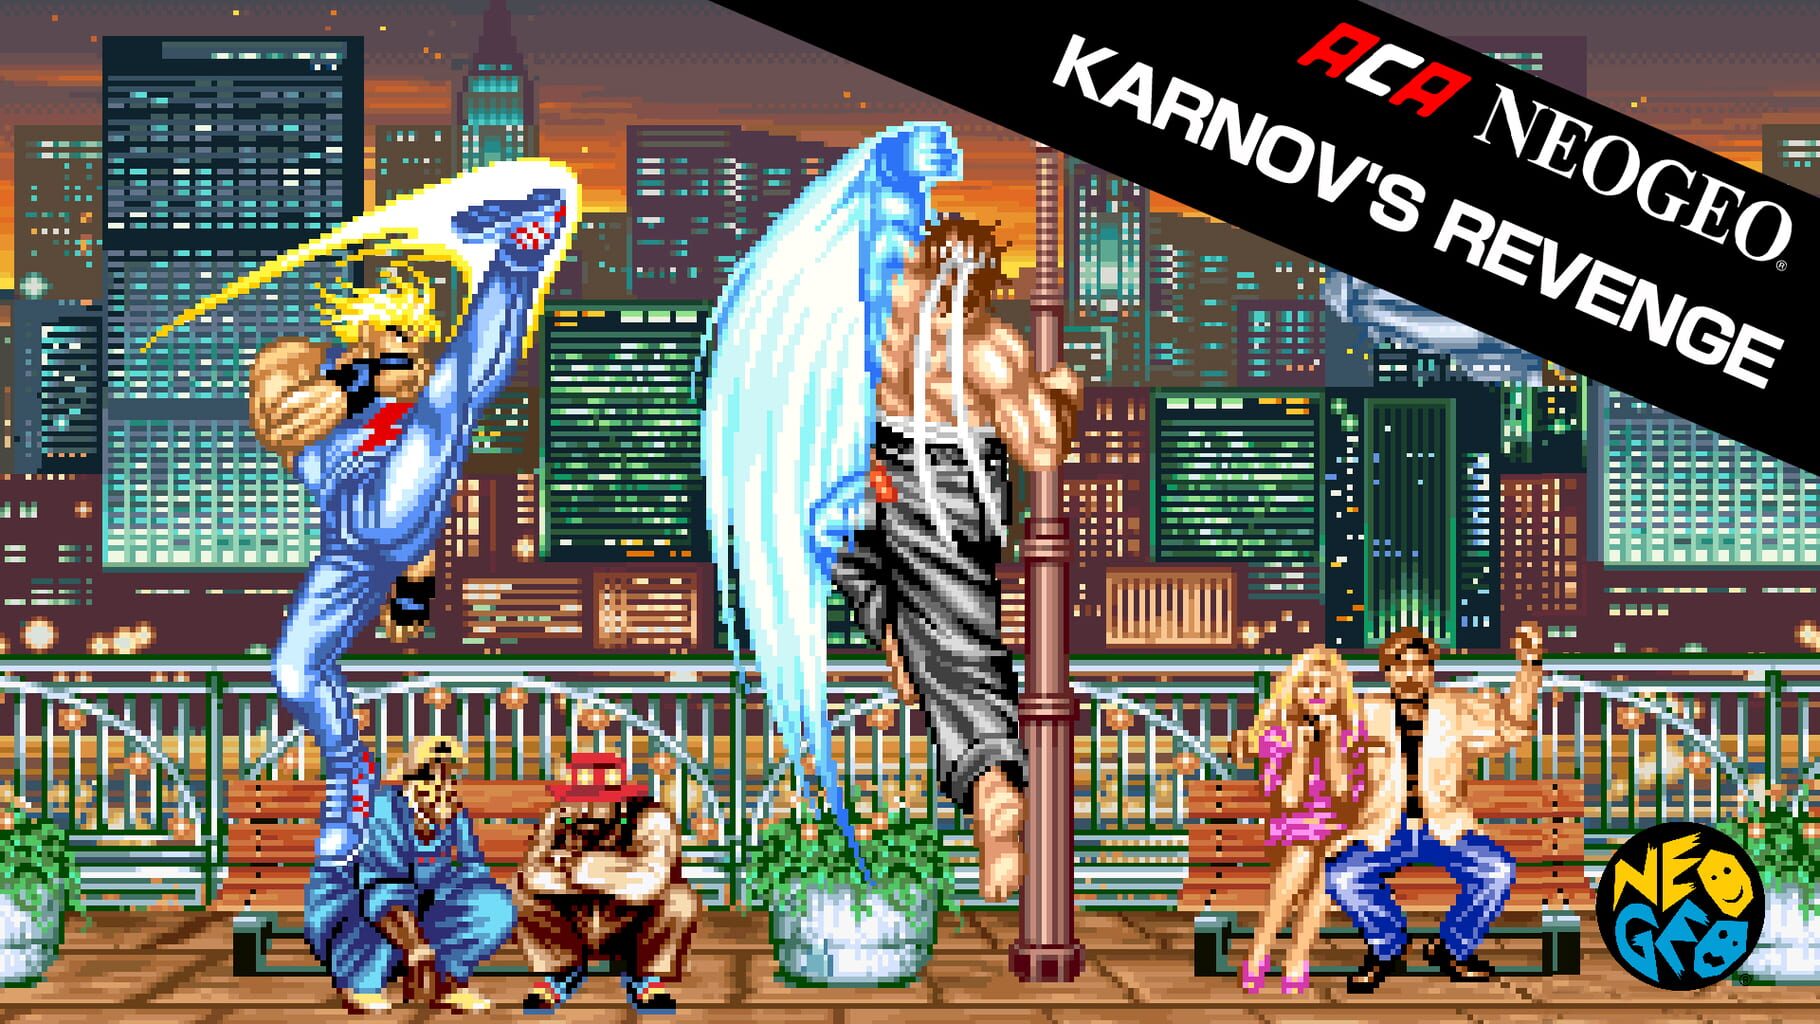 ACA Neo Geo: Karnov's Revenge artwork